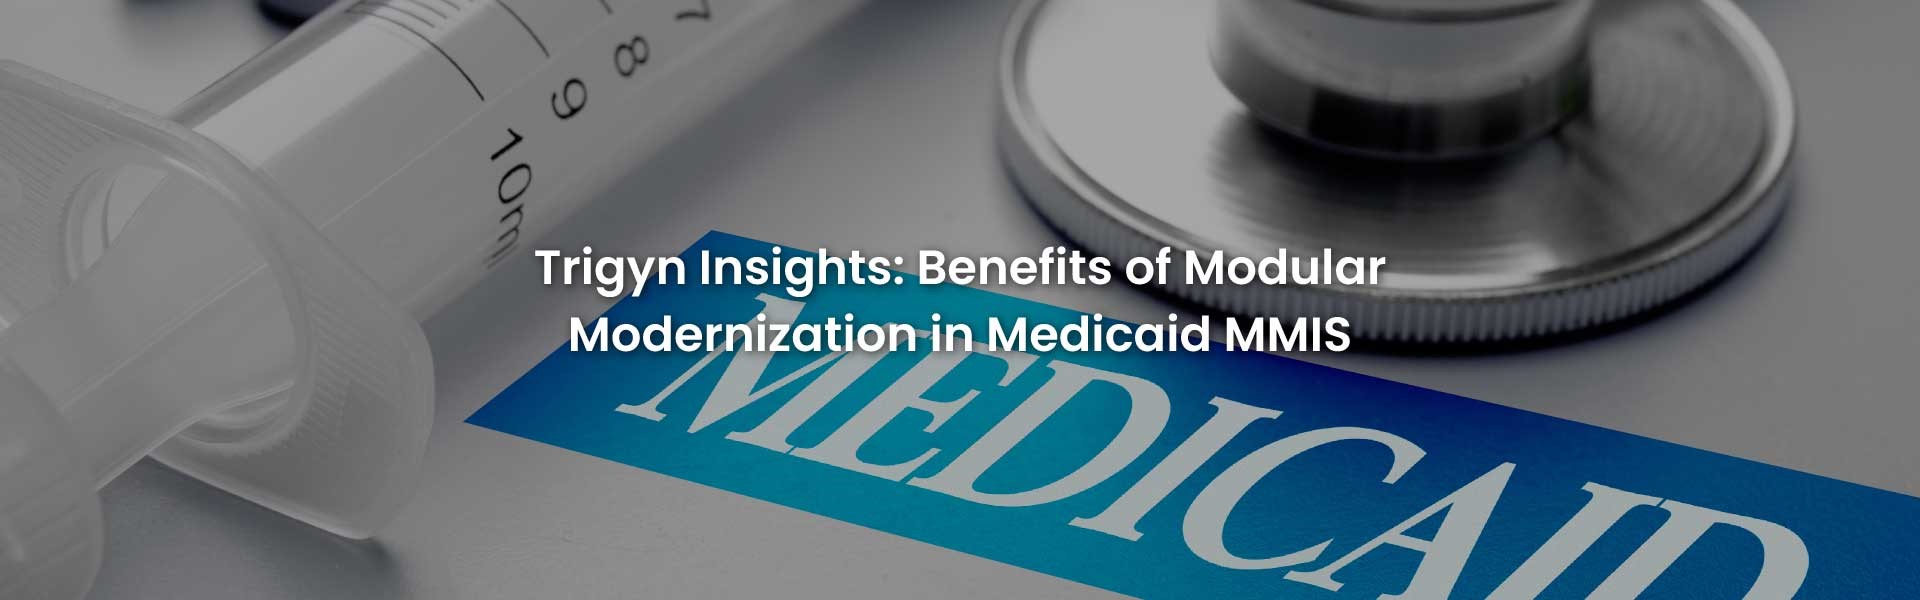 Modernization in Medicaid MMIS